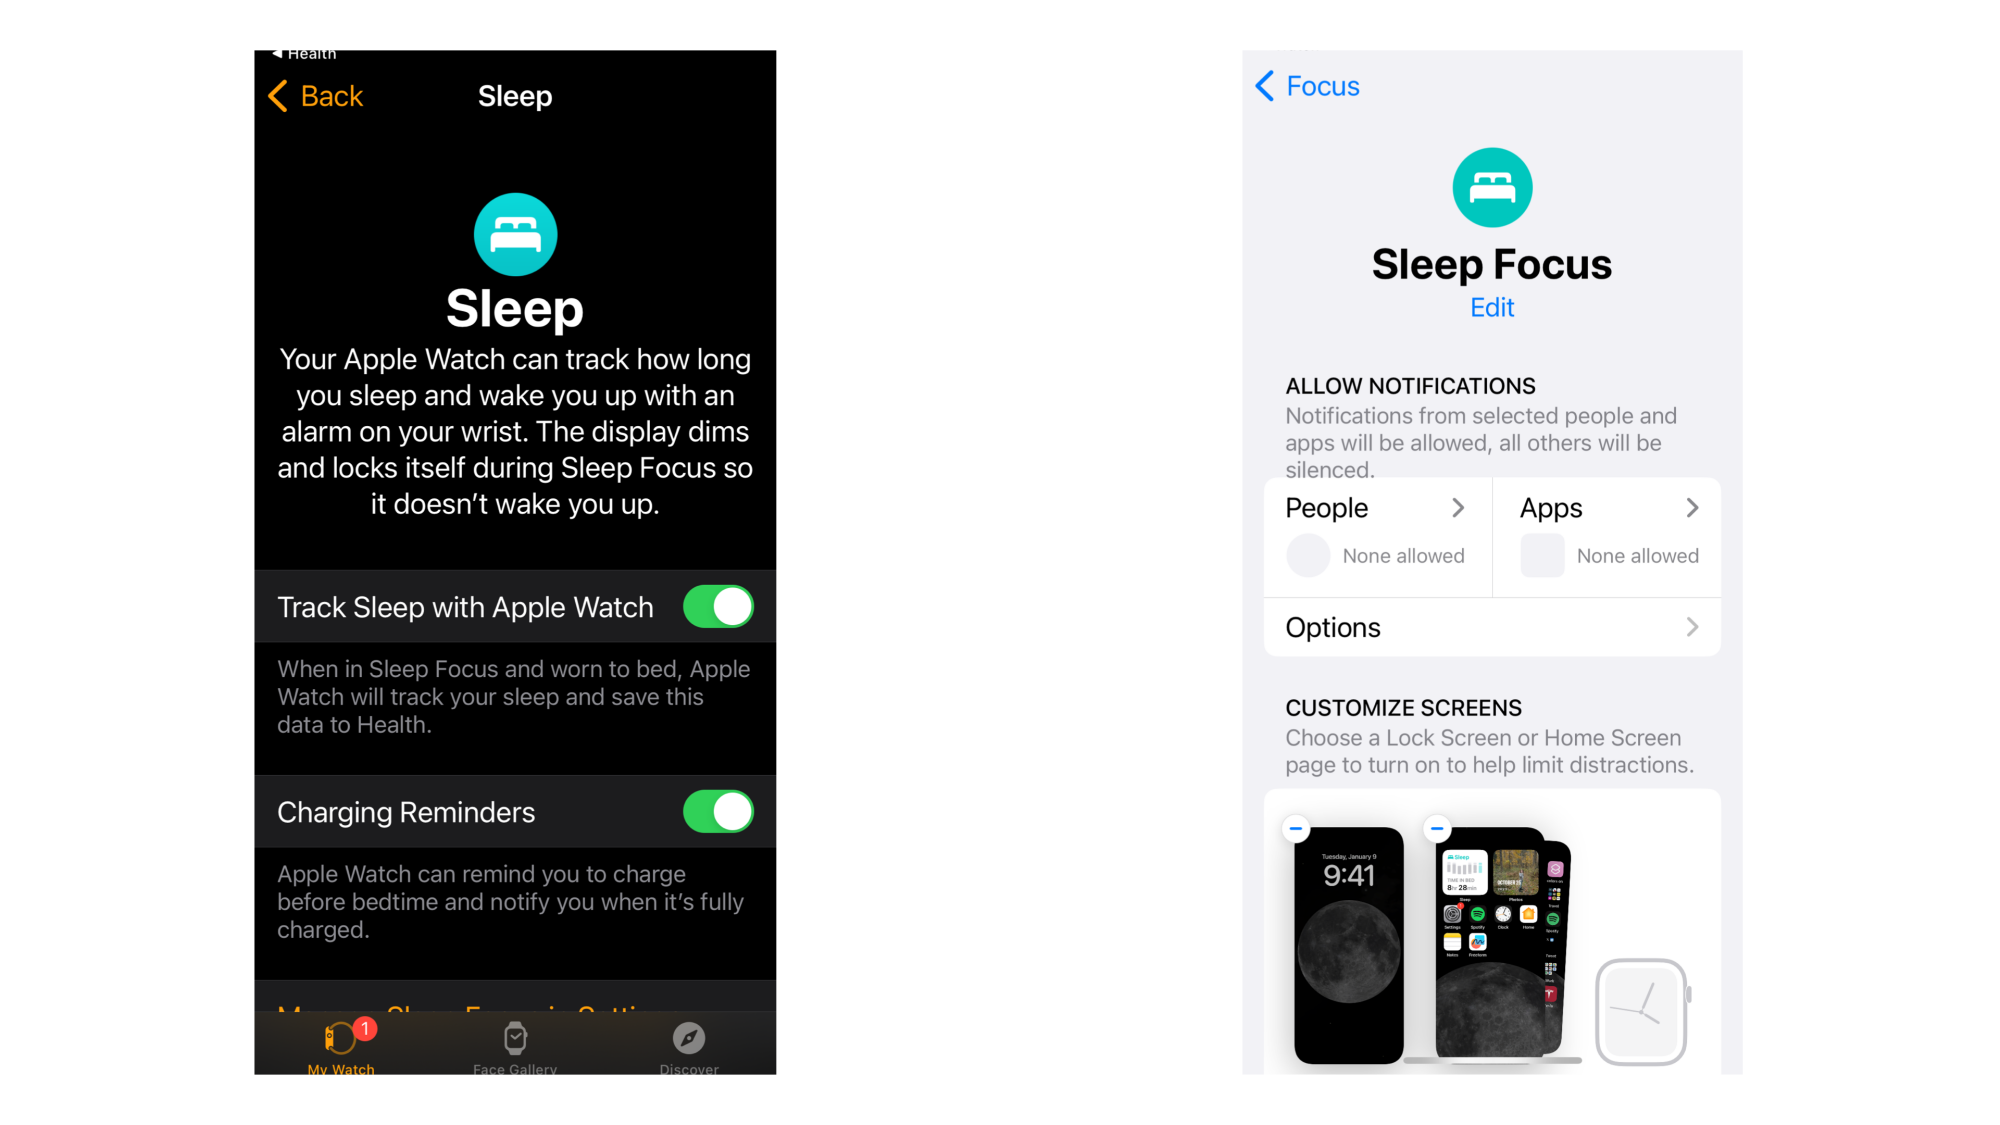 Watch app and Sleep Focus settings